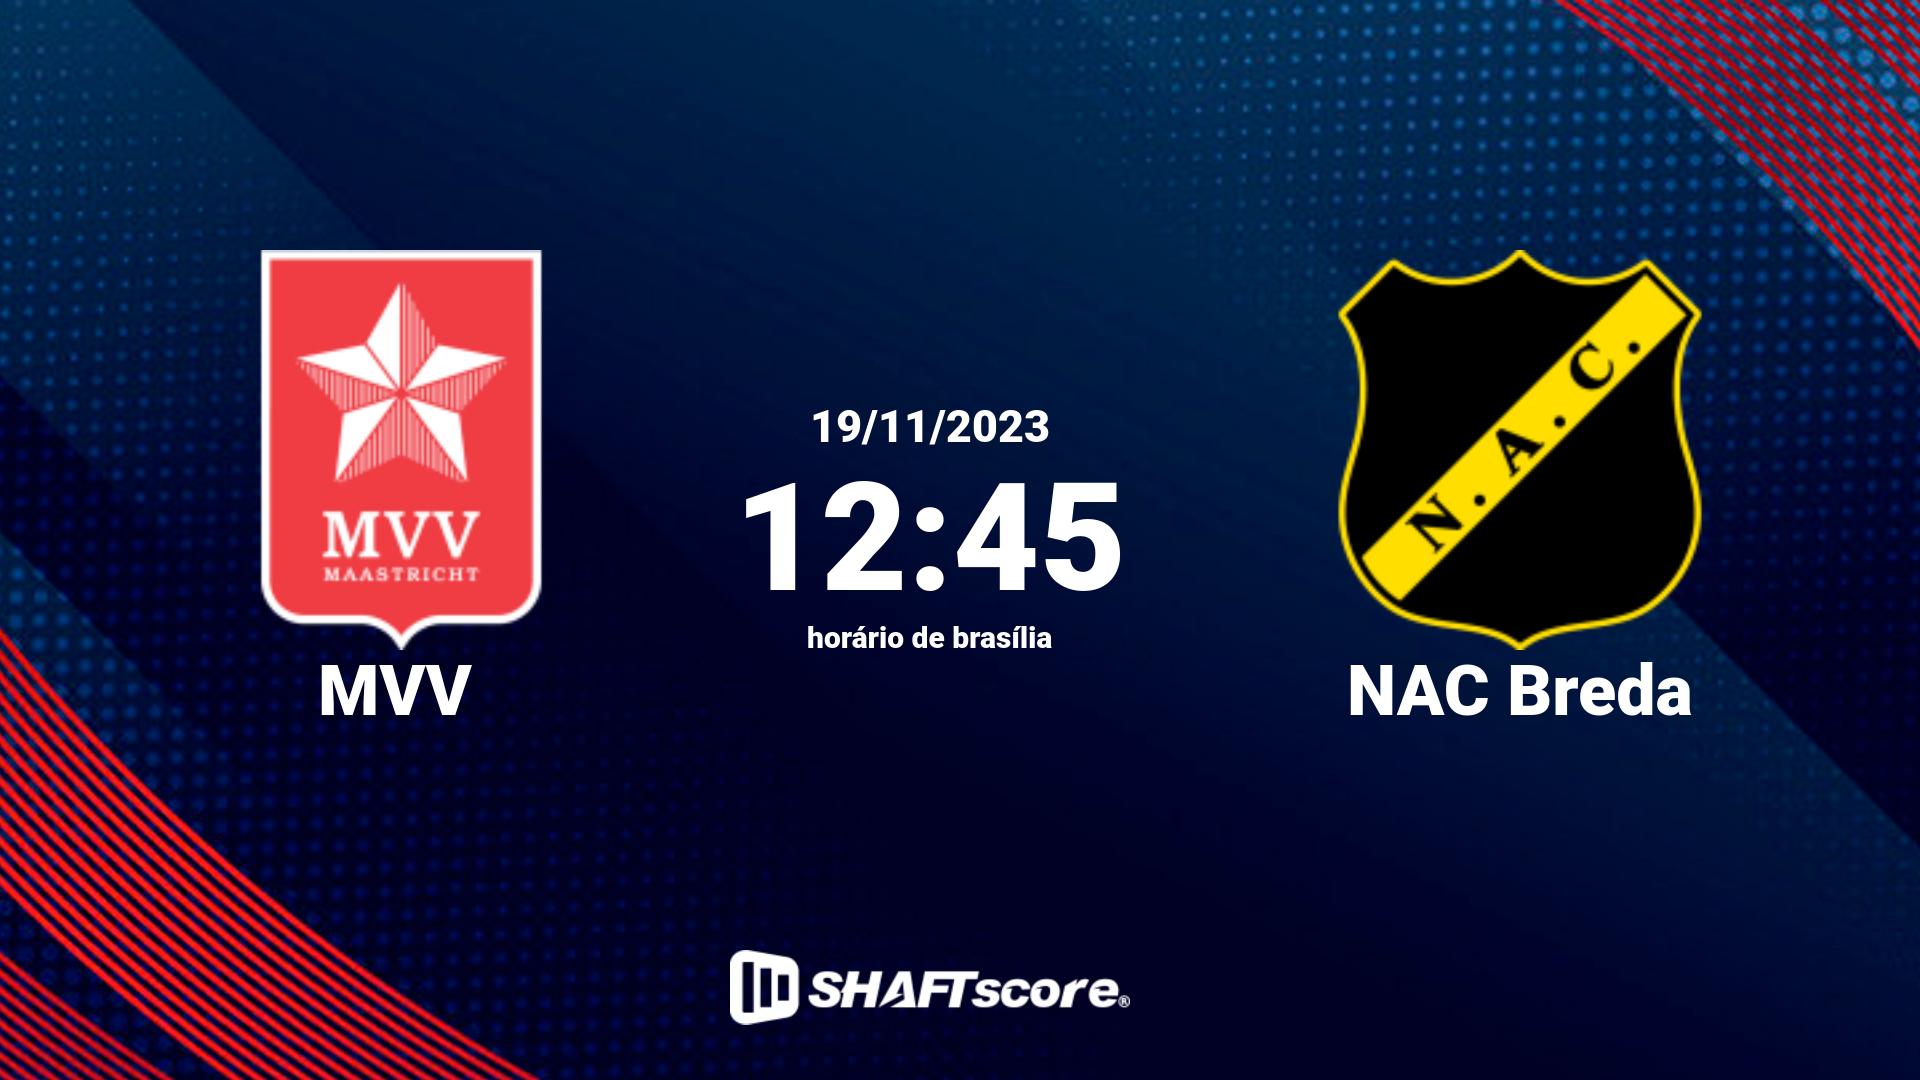 Estatísticas do jogo MVV vs NAC Breda 19.11 12:45